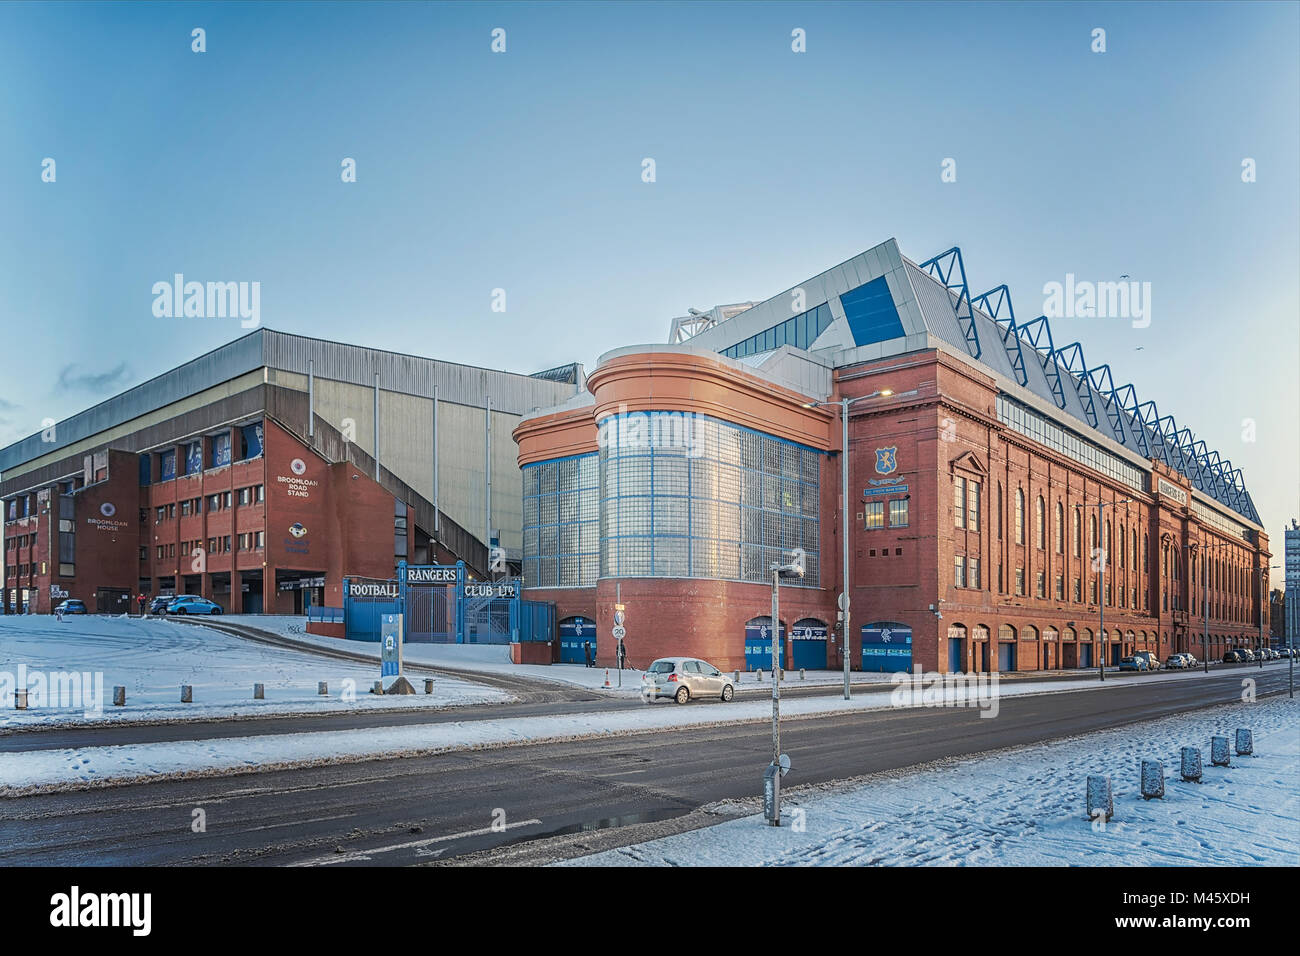 GLASGOW, SCOZIA - Gennaio 17, 2018: una vista del famoso Ibrox Stadium che ospita i Rangers Football Club. Foto Stock